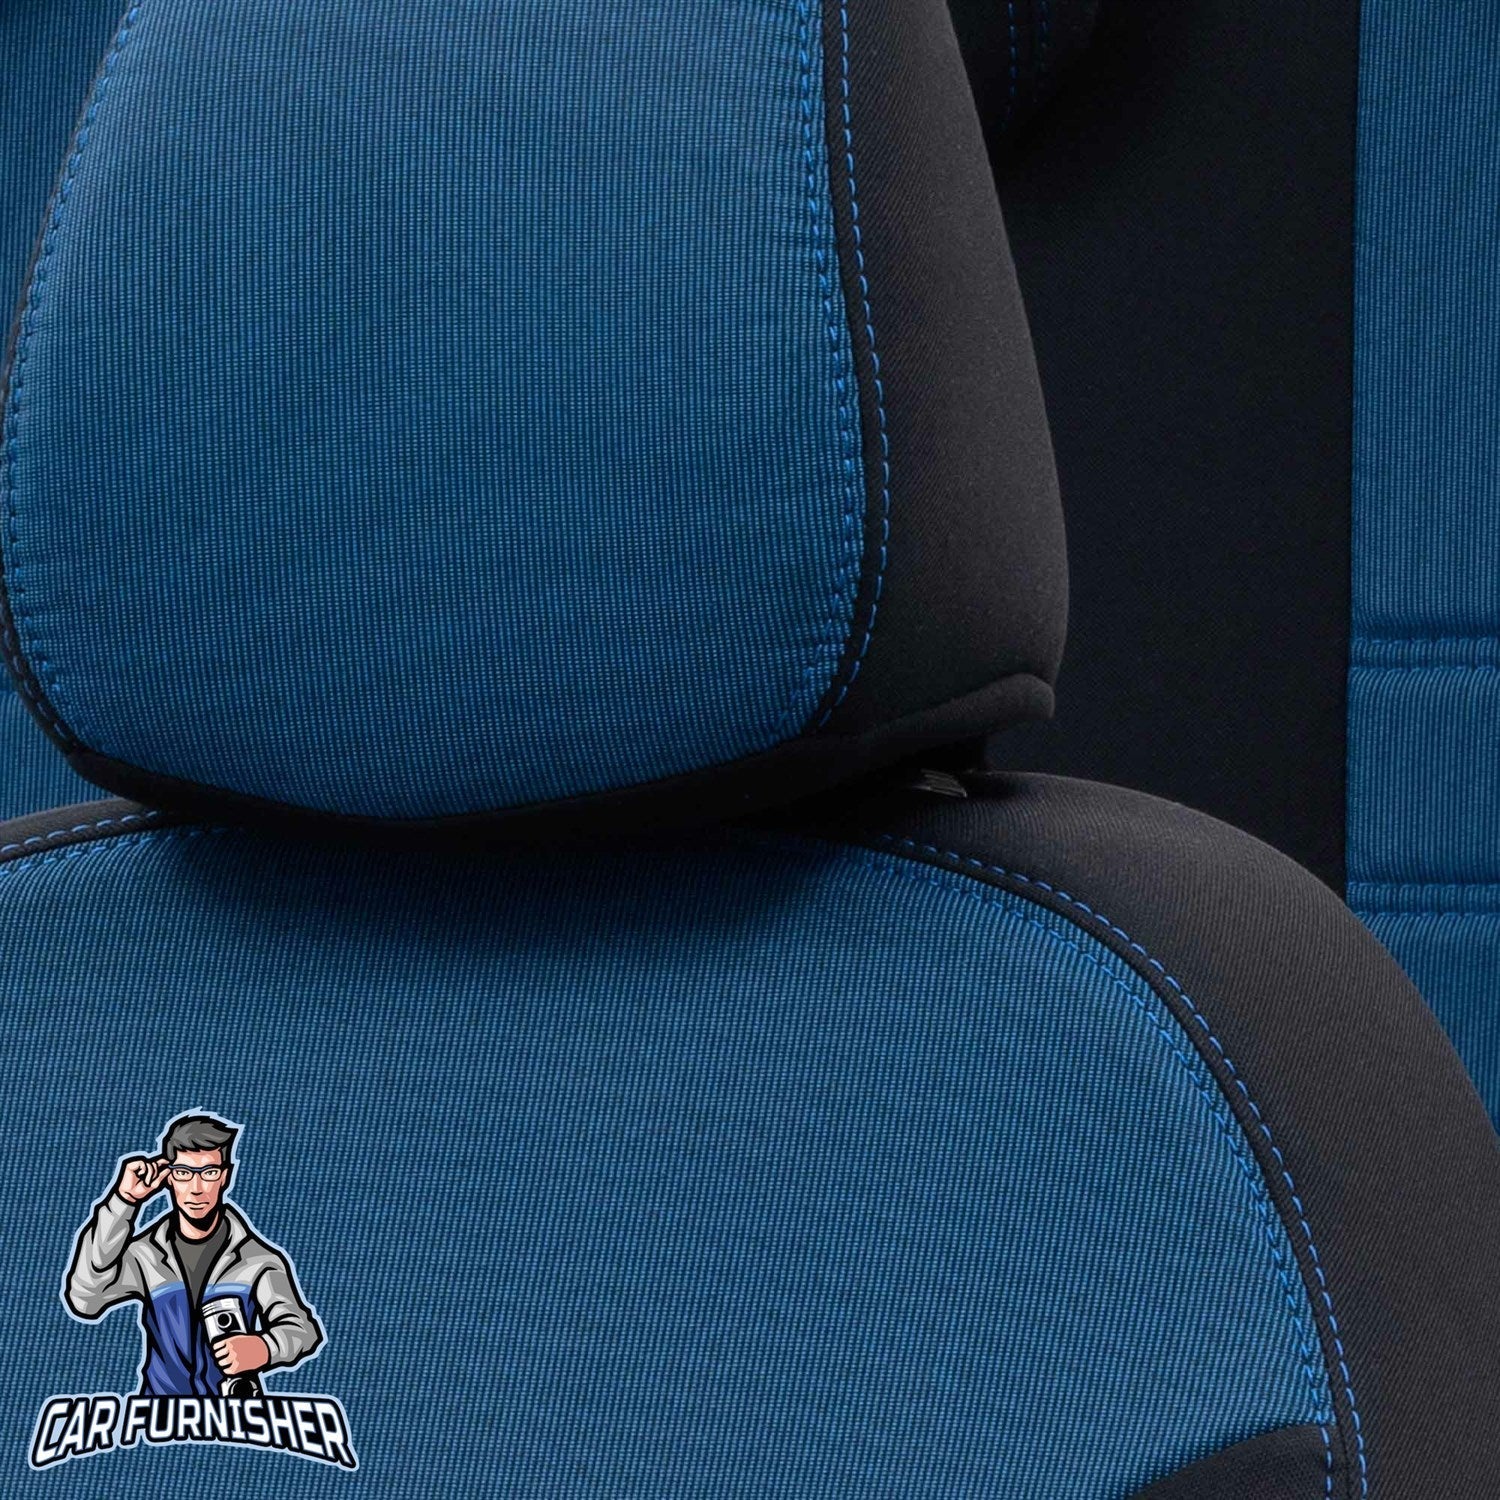 Proton Gen-2 Seat Covers Original Jacquard Design Blue Jacquard Fabric